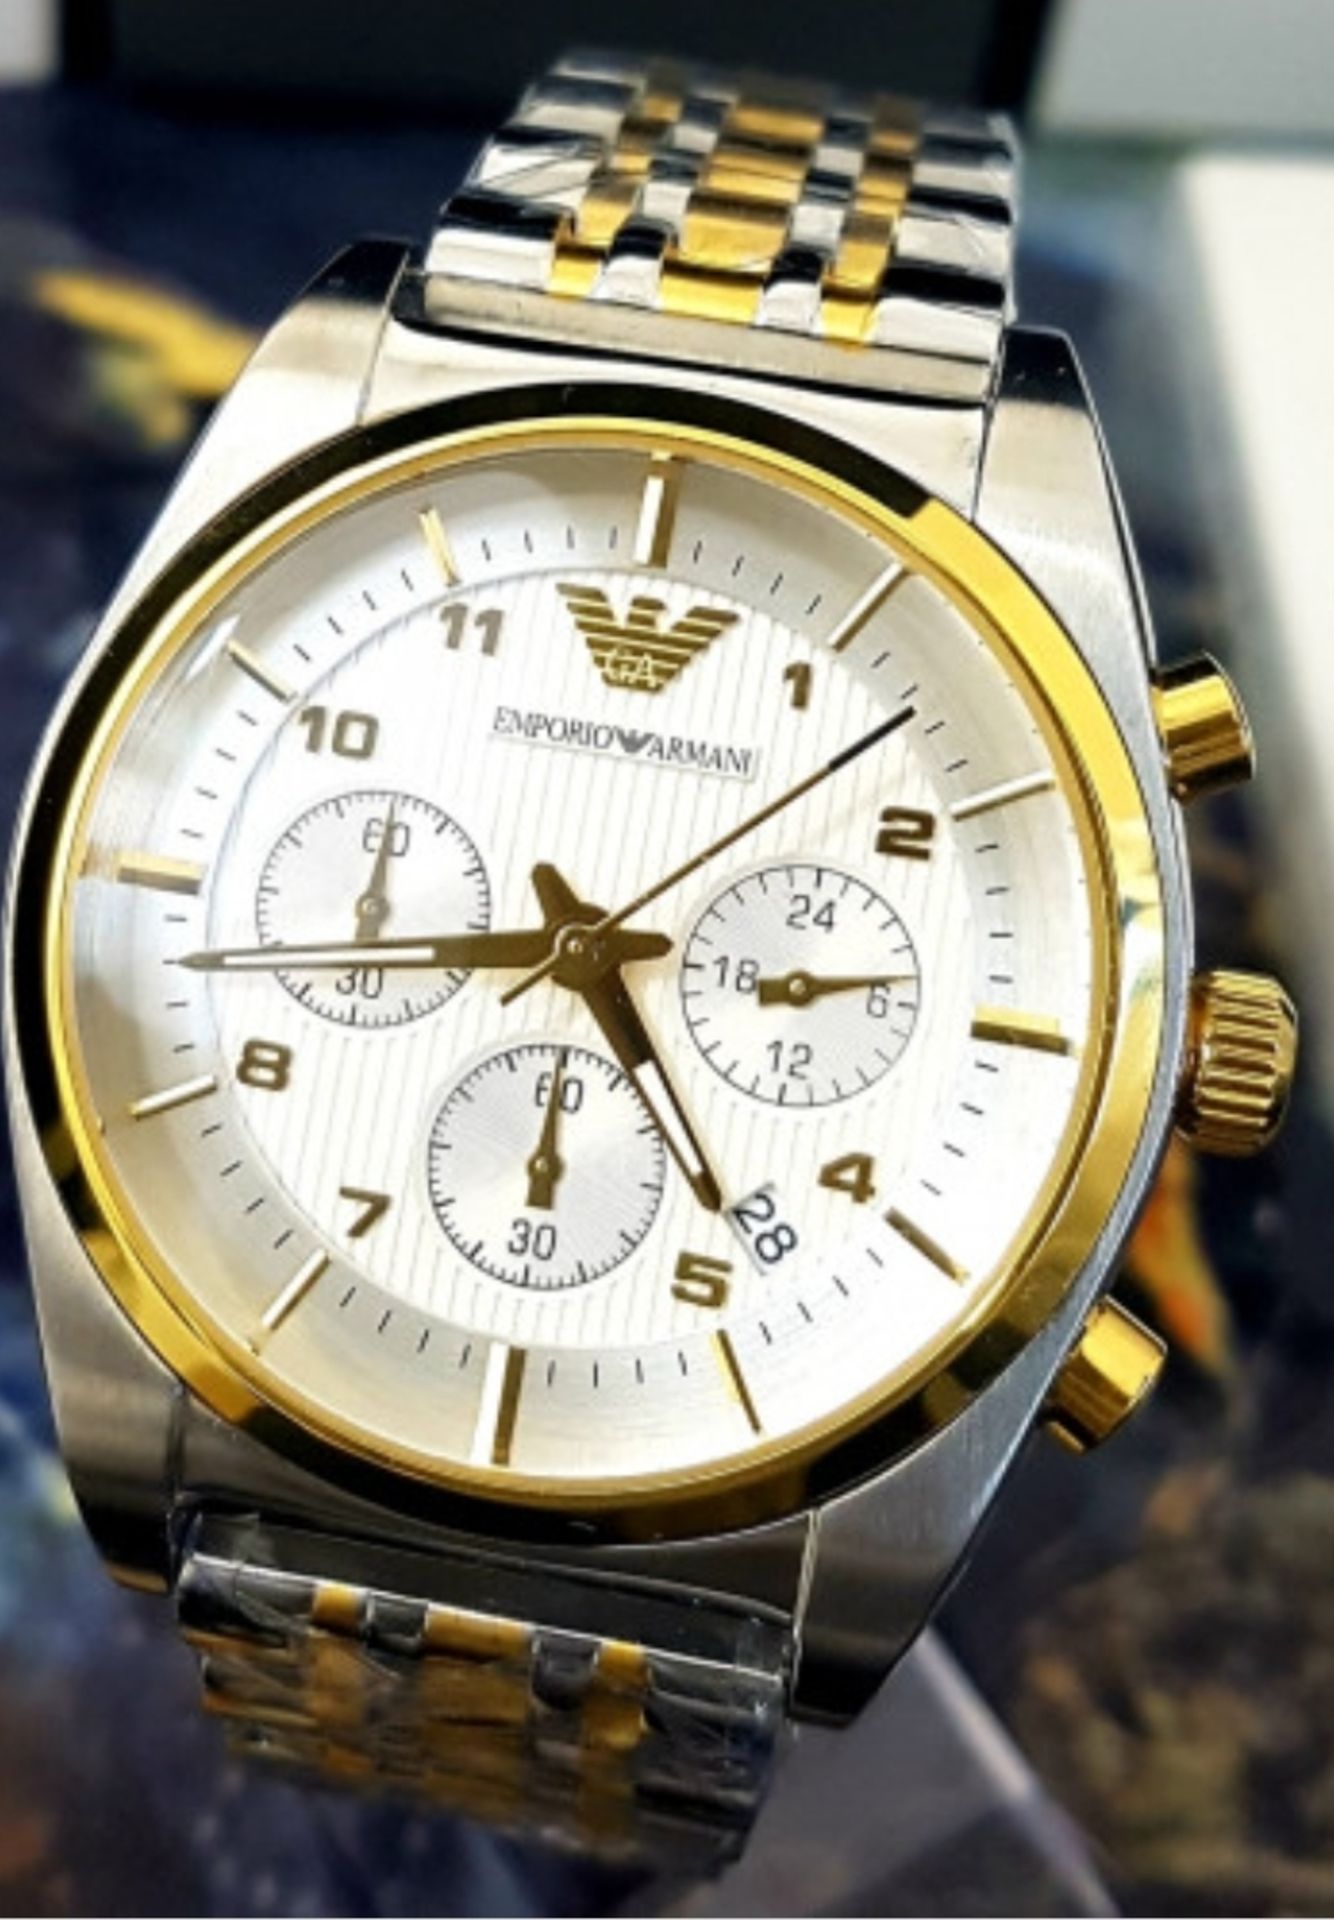 Emporio Armani AR0396 Men's Two Tone Gold & Silver Quartz Chronograph Watch - Image 6 of 7